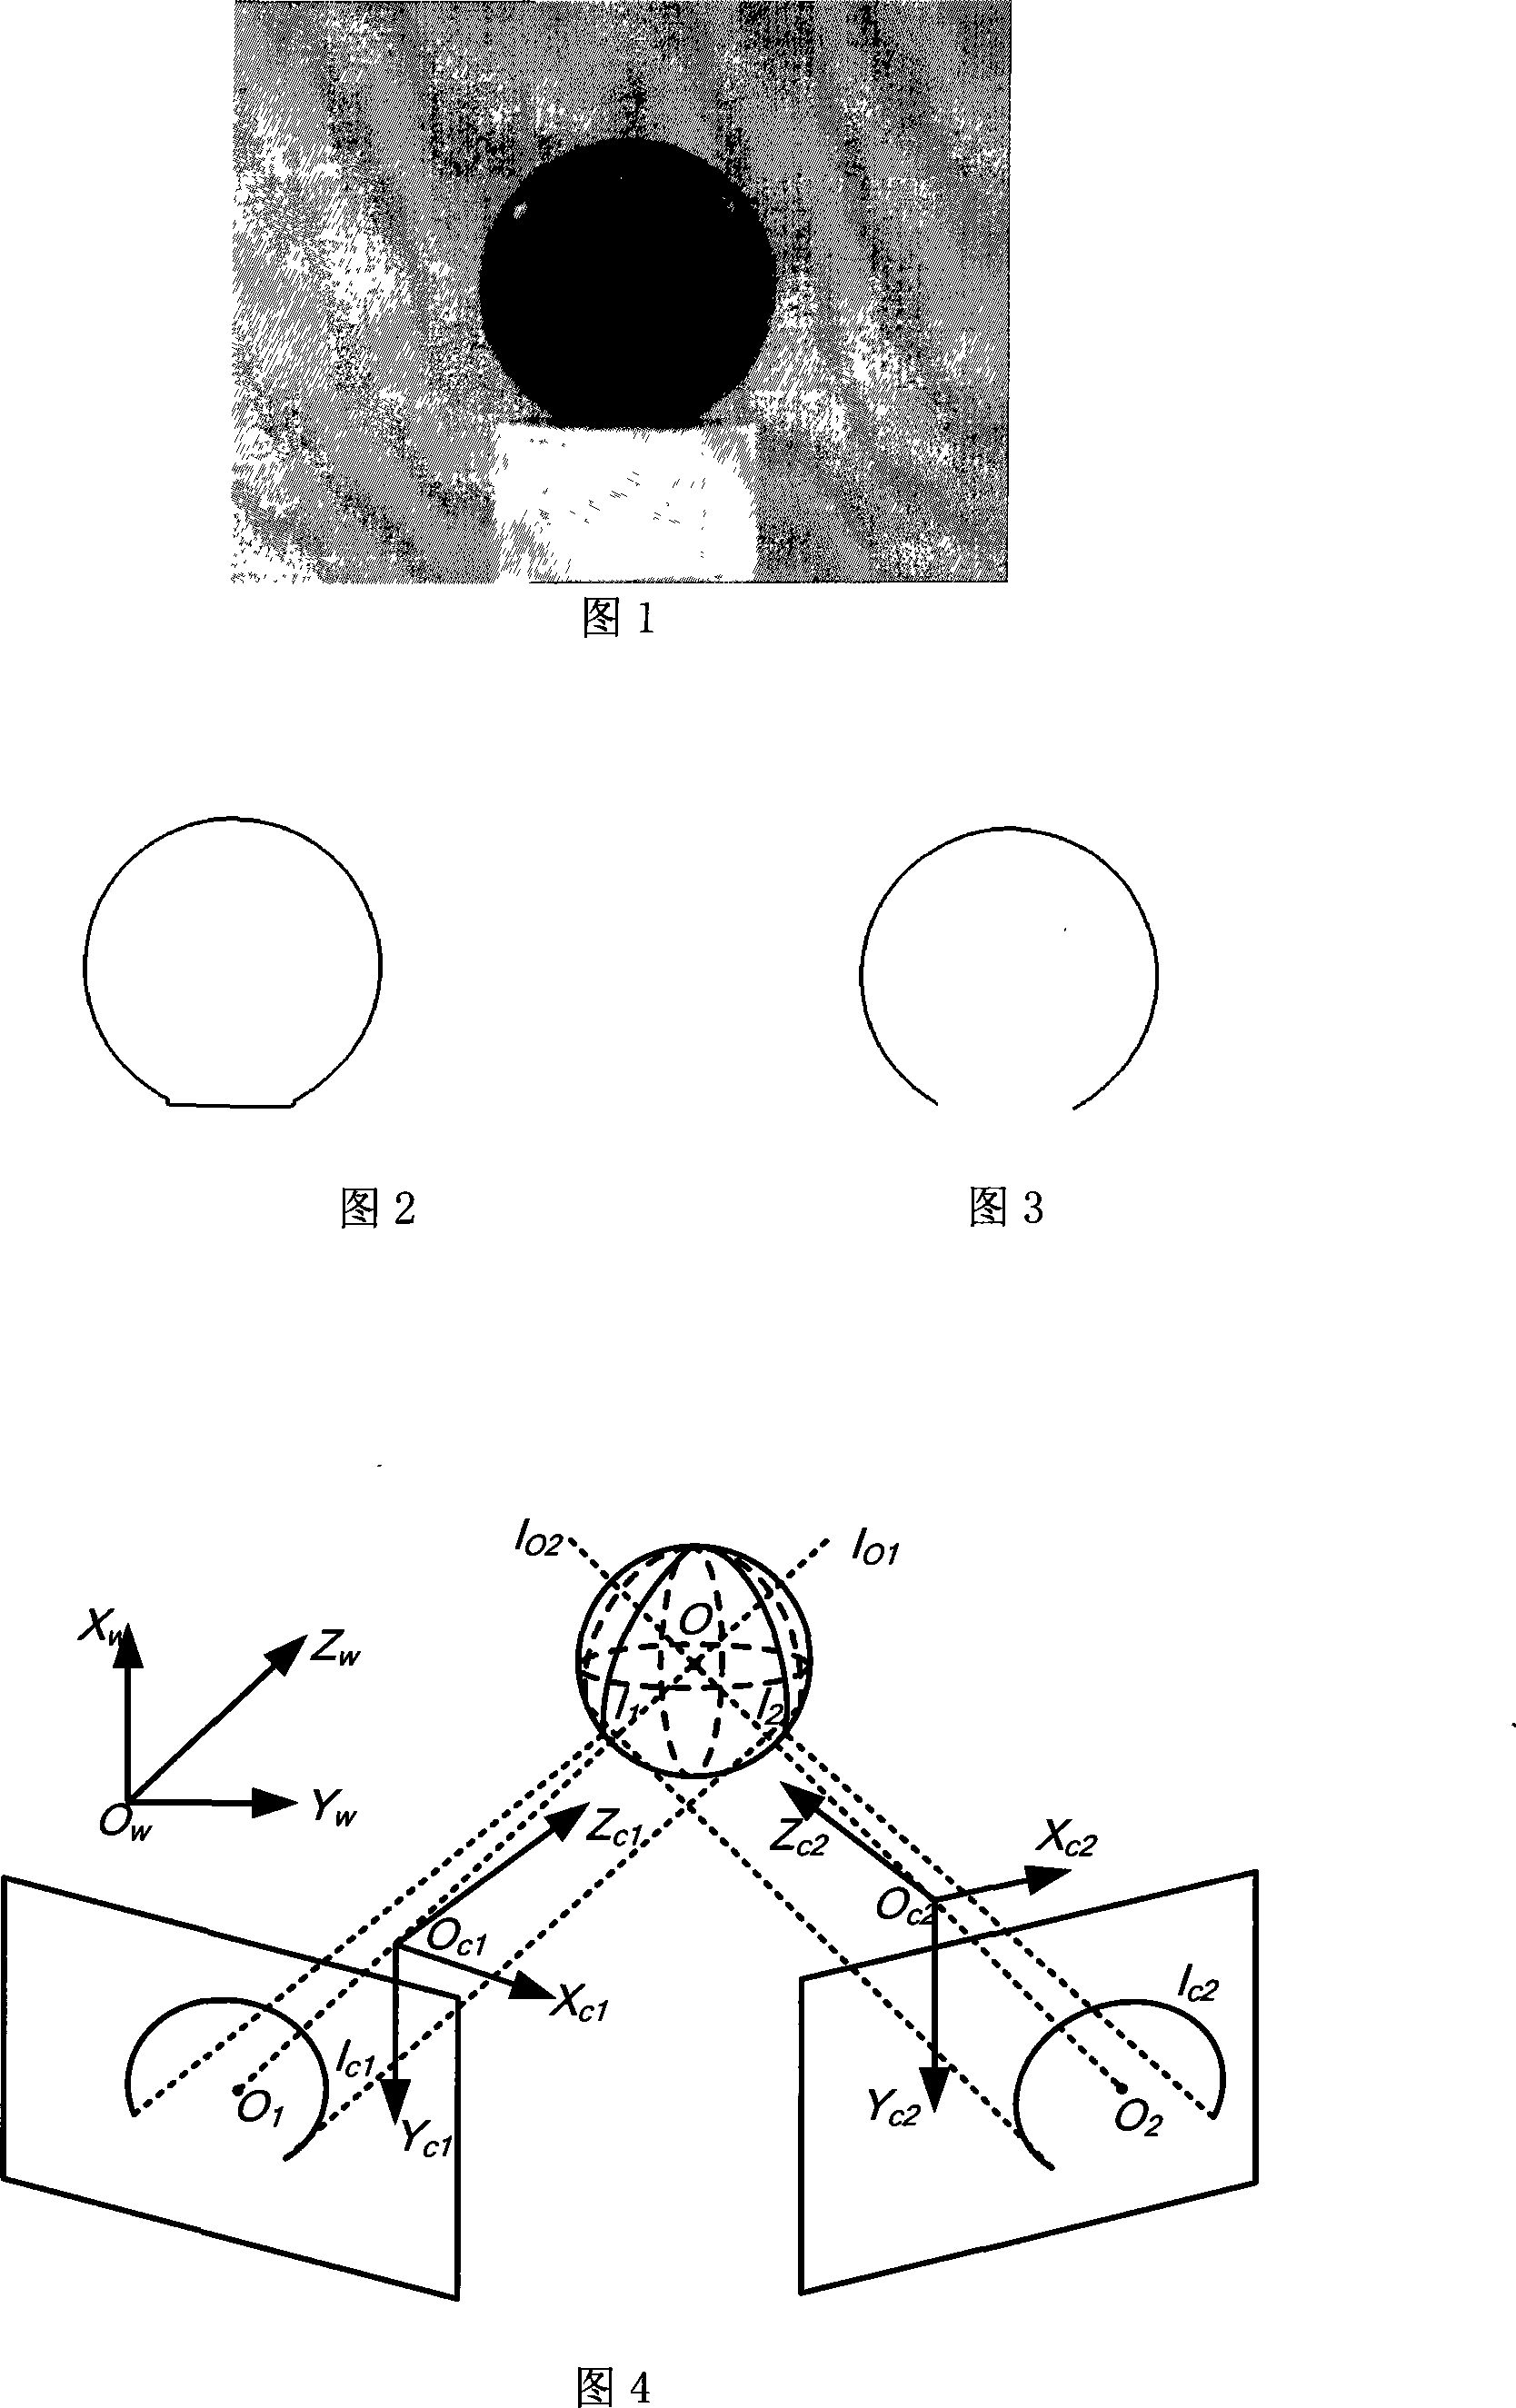 Binocular vision rotating axis calibration method